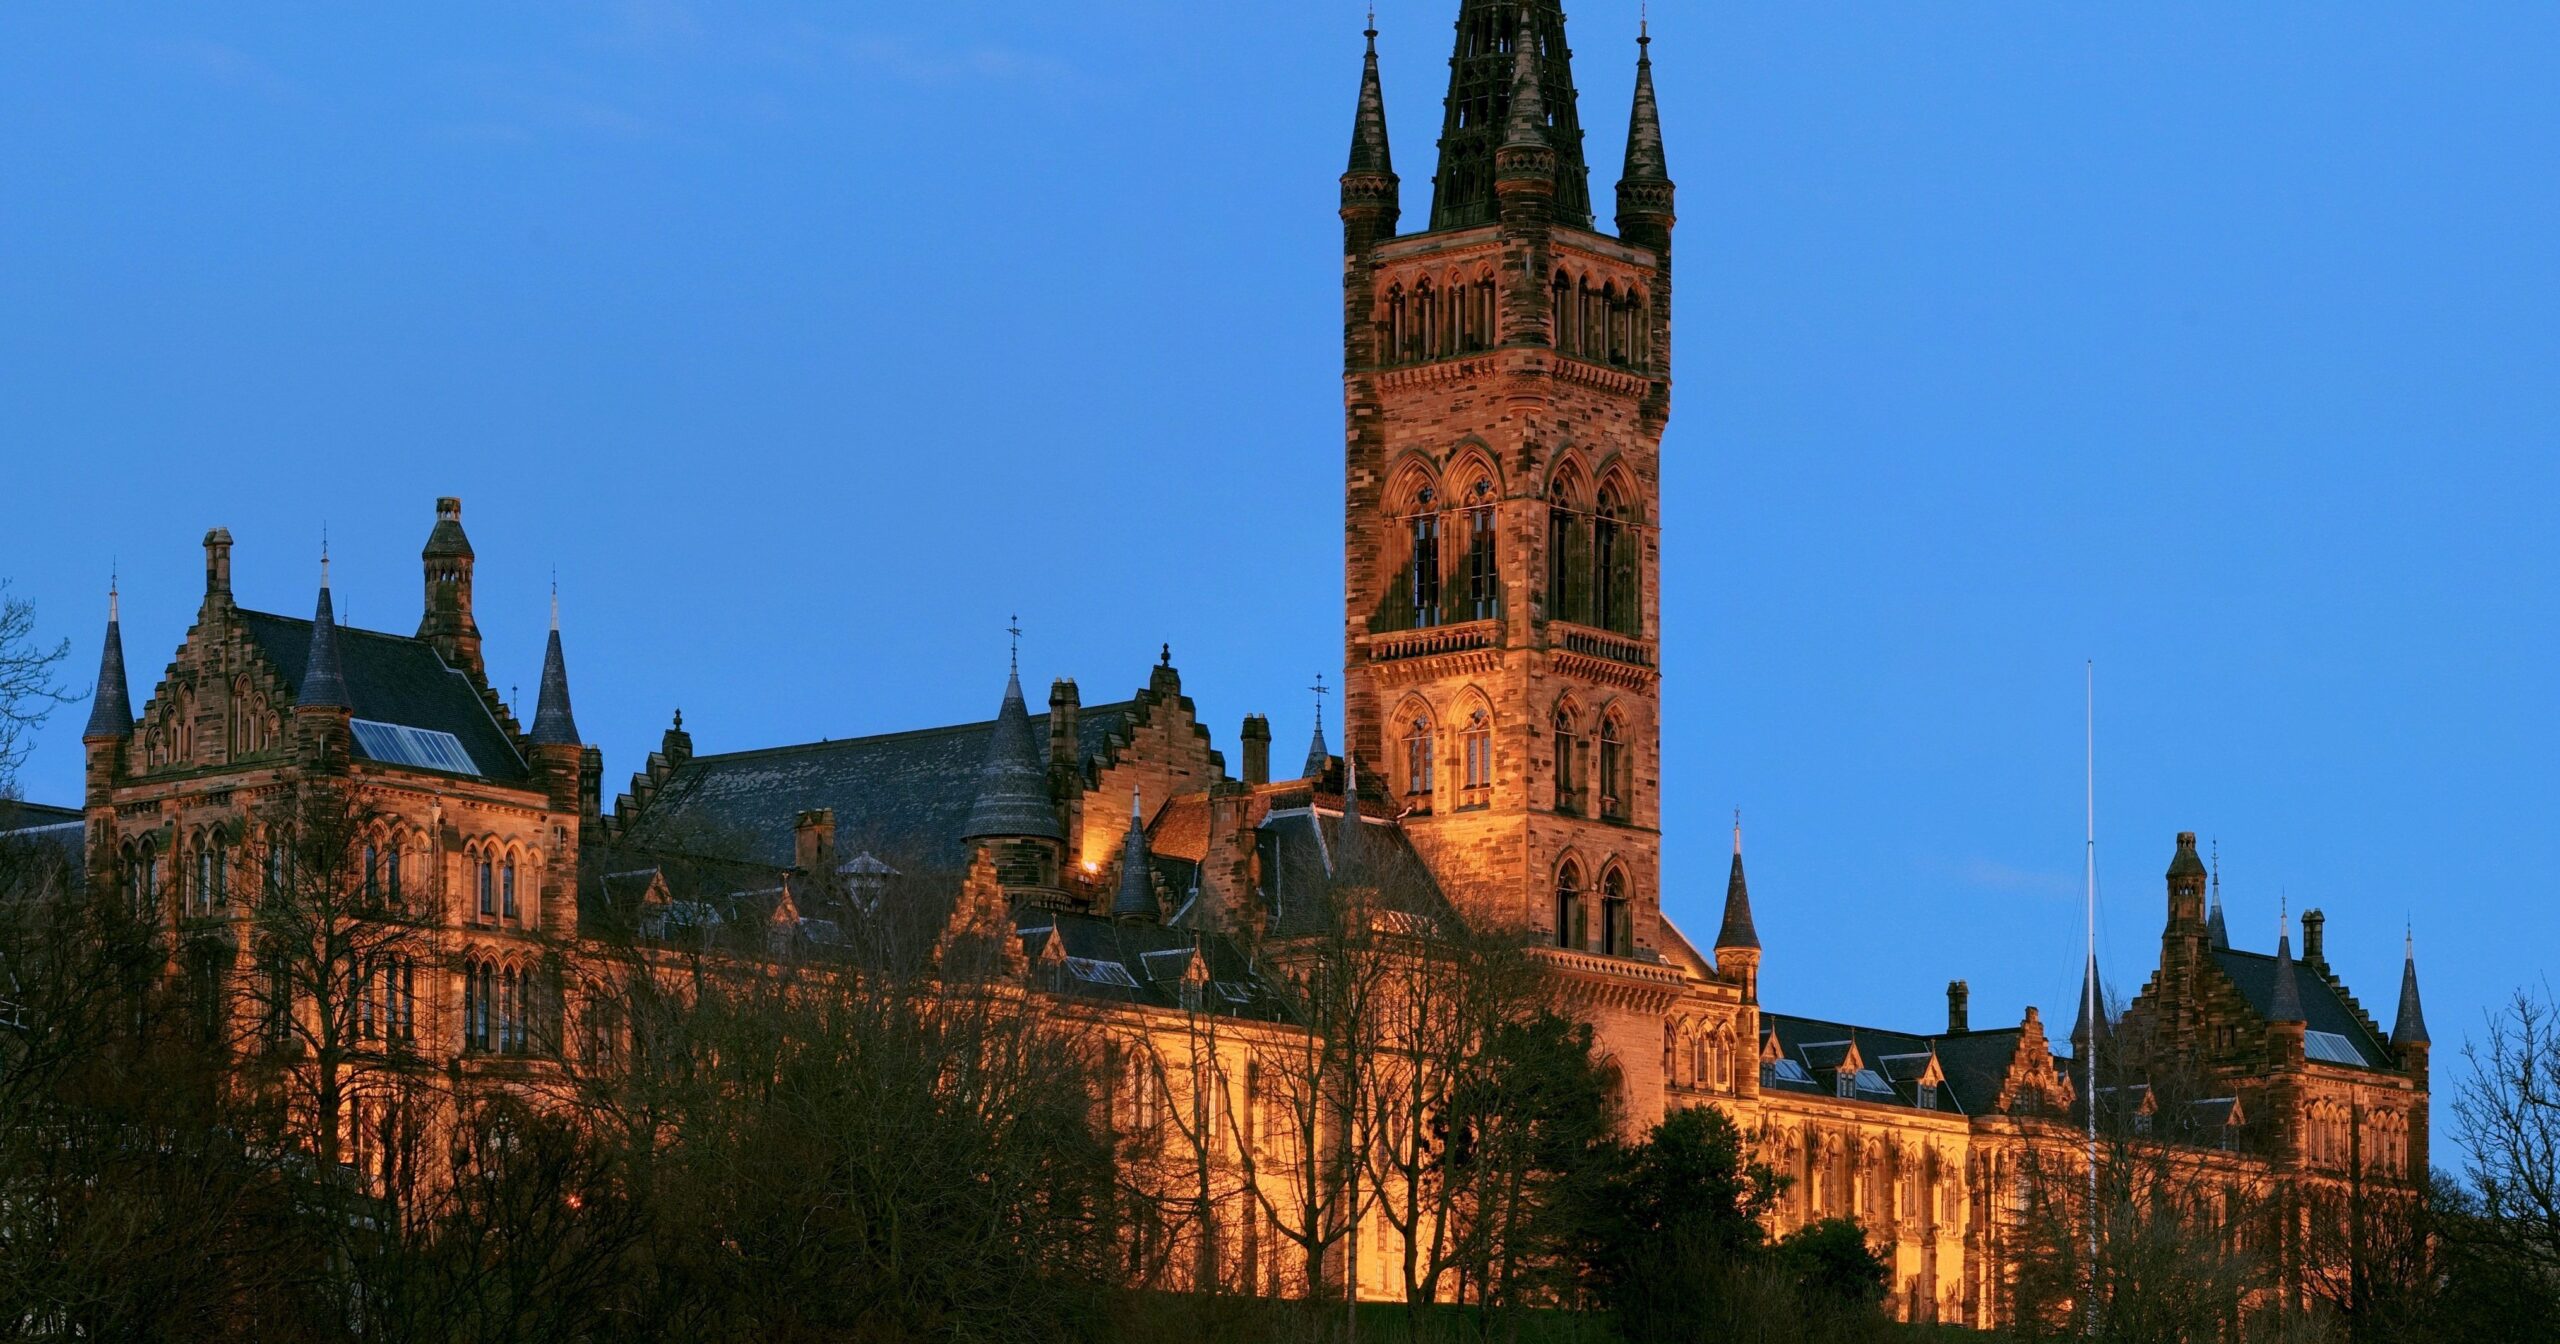 Glasgow soars above Edinburgh in Guardian uni rankings